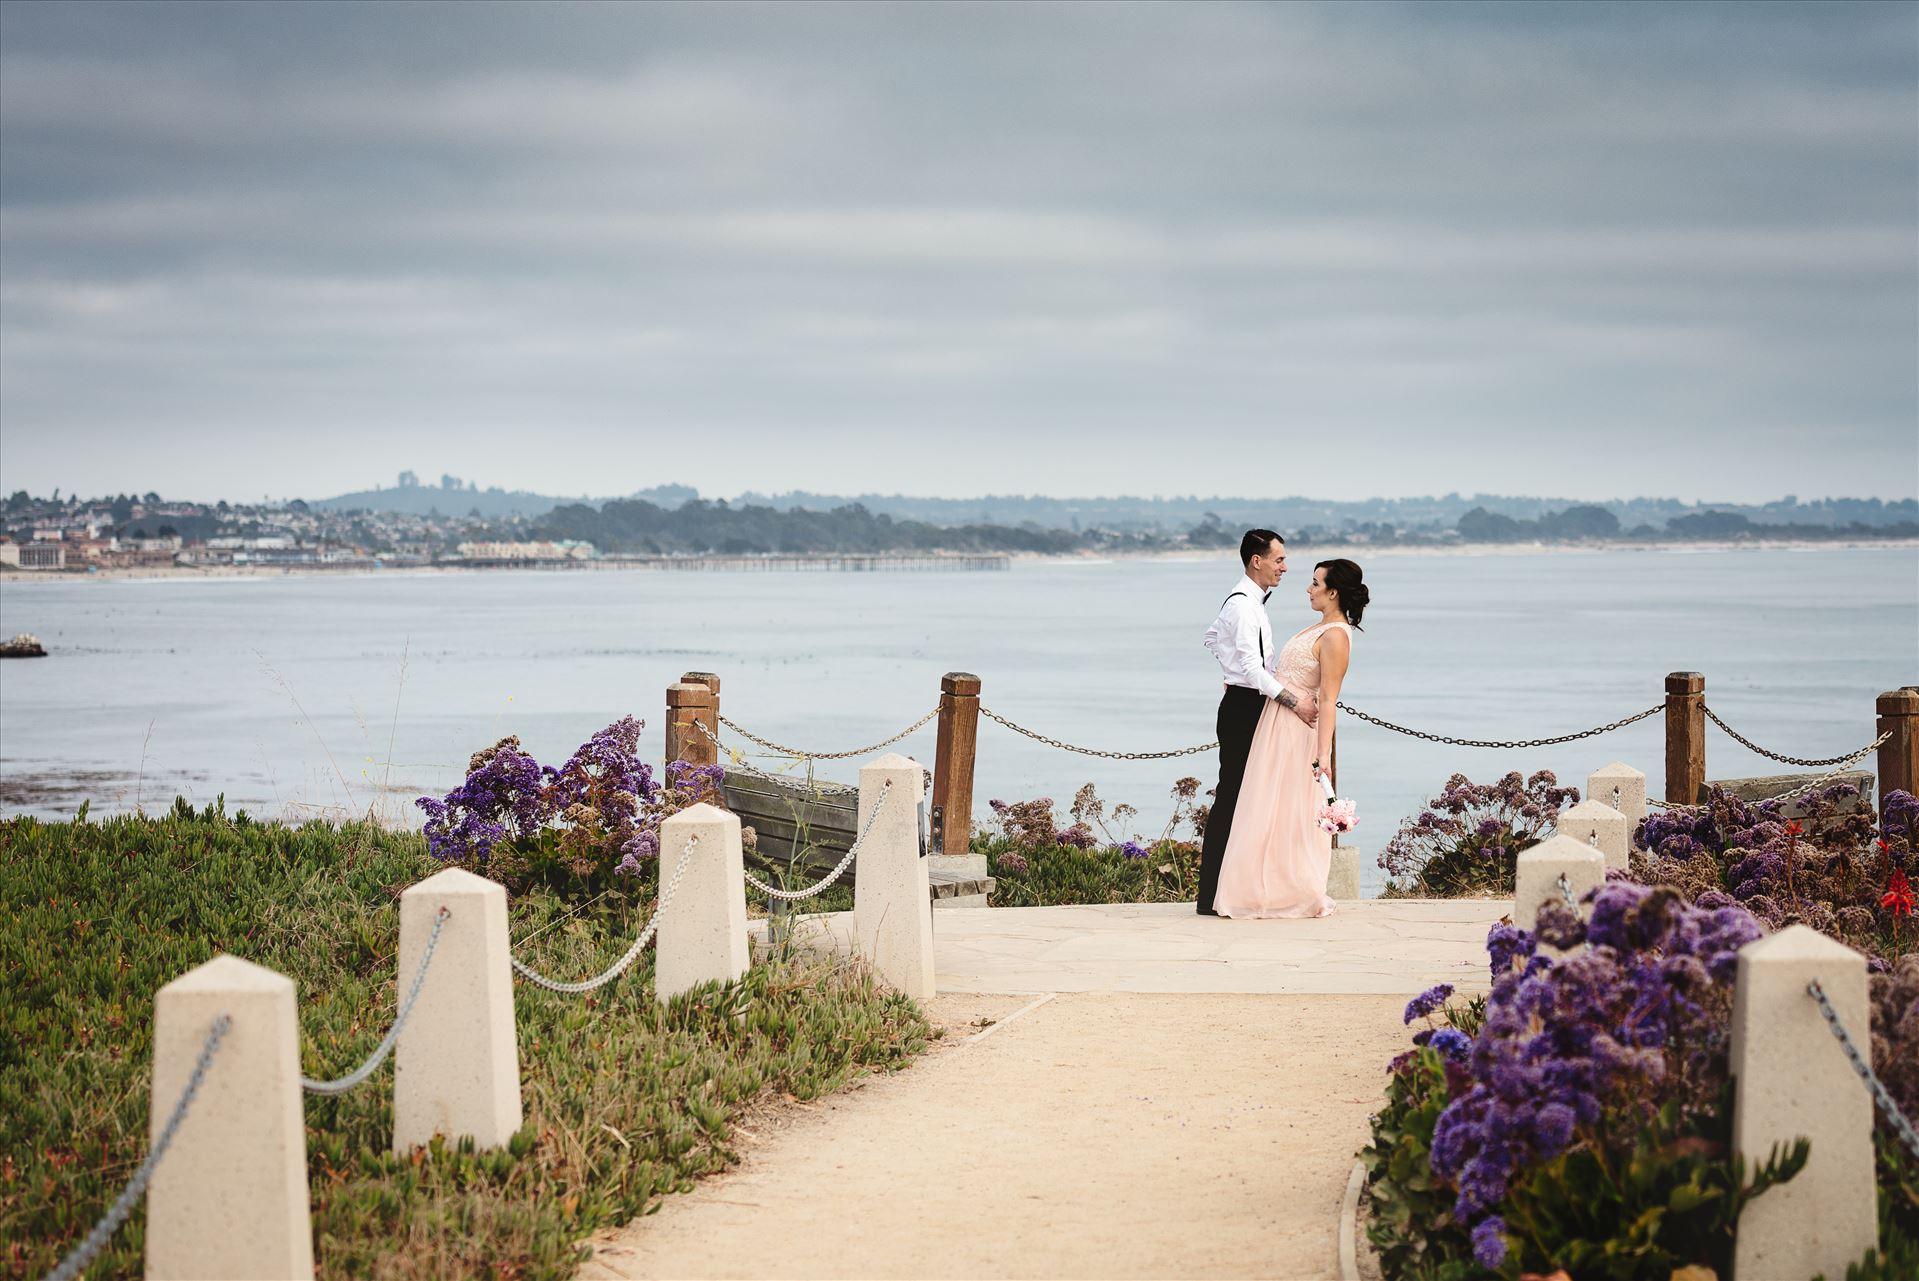 Courtney and Ruiz Shell Beach Wedding 01 -  by Sarah Williams